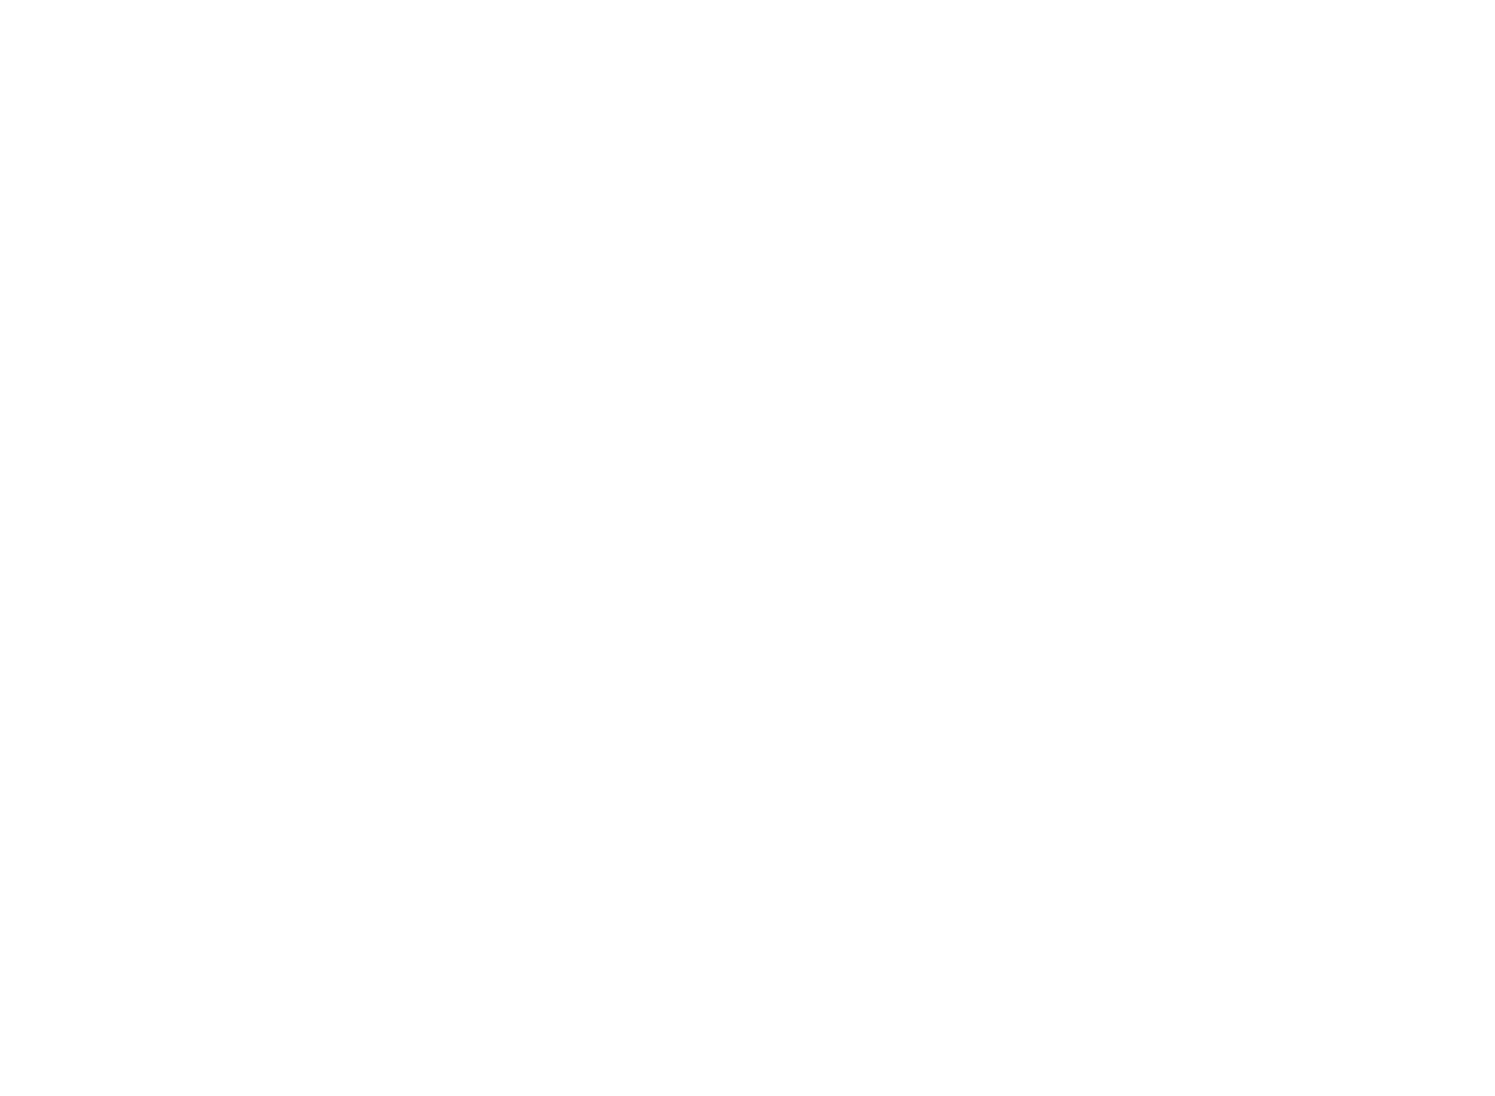 Complete Solaria logo for dark backgrounds (transparent PNG)